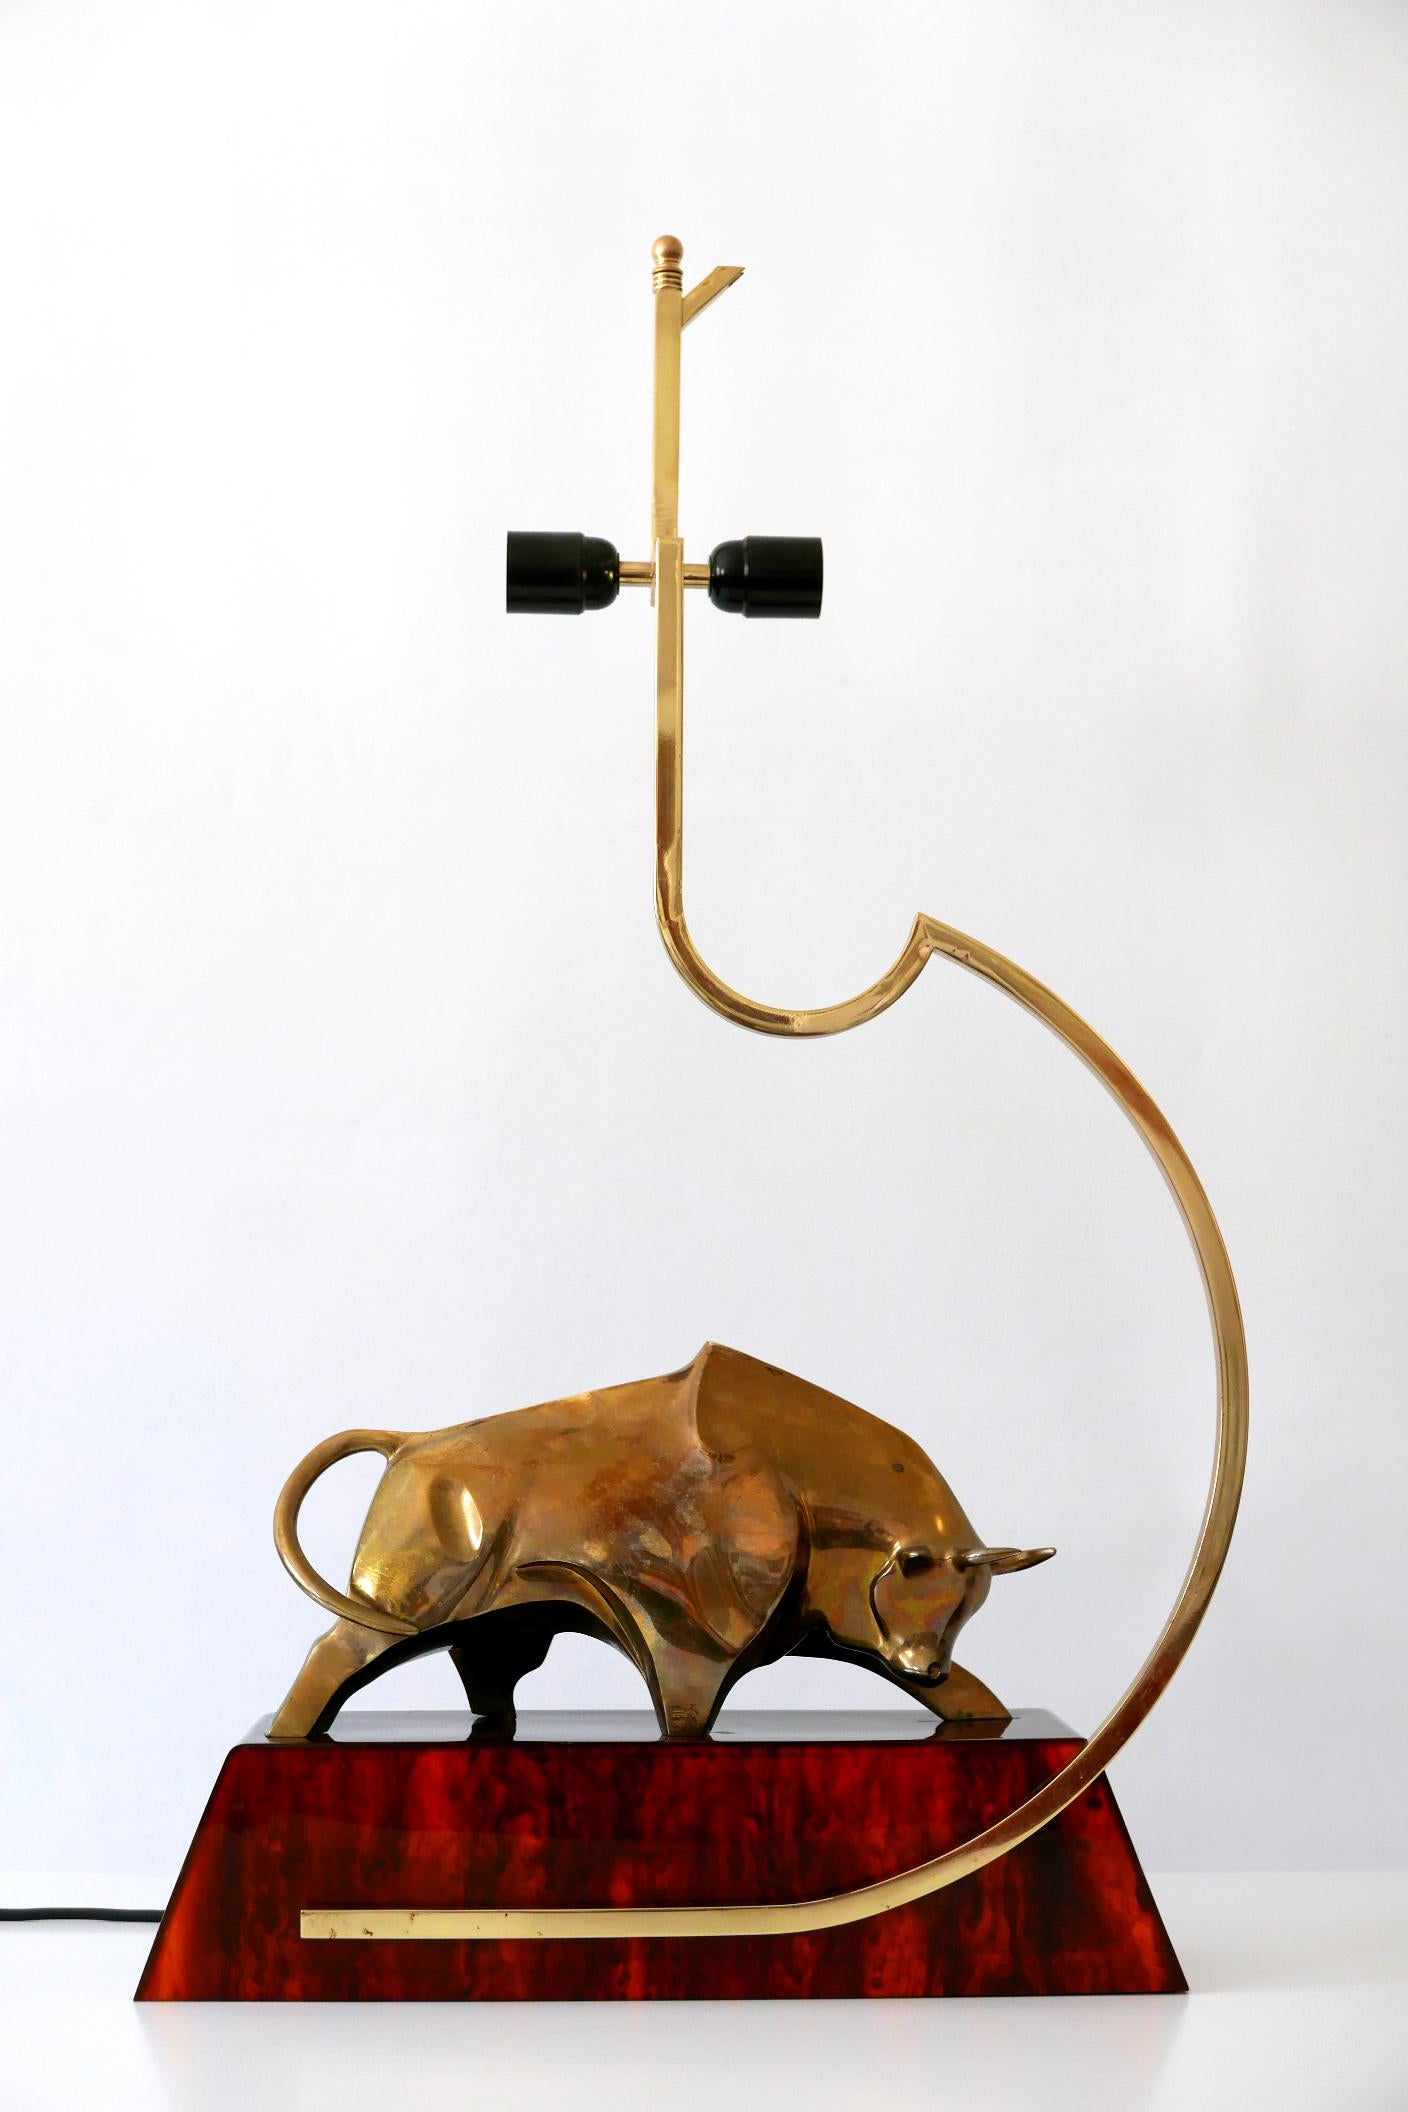 Huge Modernist Brass Light Object or Table Lamp Bull by D. Delo for Pragos Italy For Sale 2